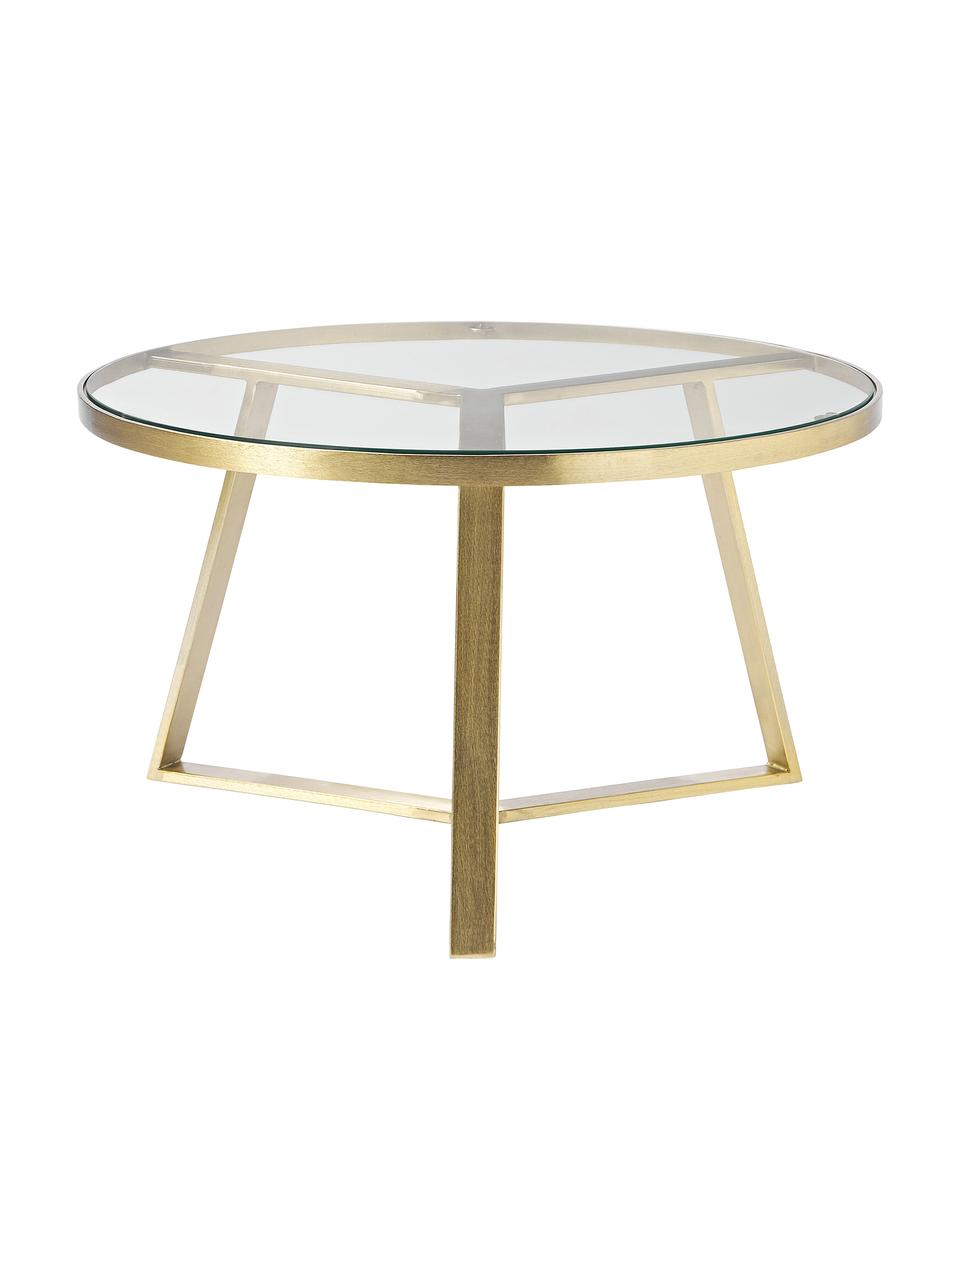 Mesa de centro redonda Fortunata, Tablero: vidrio endurecido, Estructura: metal cepillado, Transparente, dorado, Ø 100 x Al 40 cm